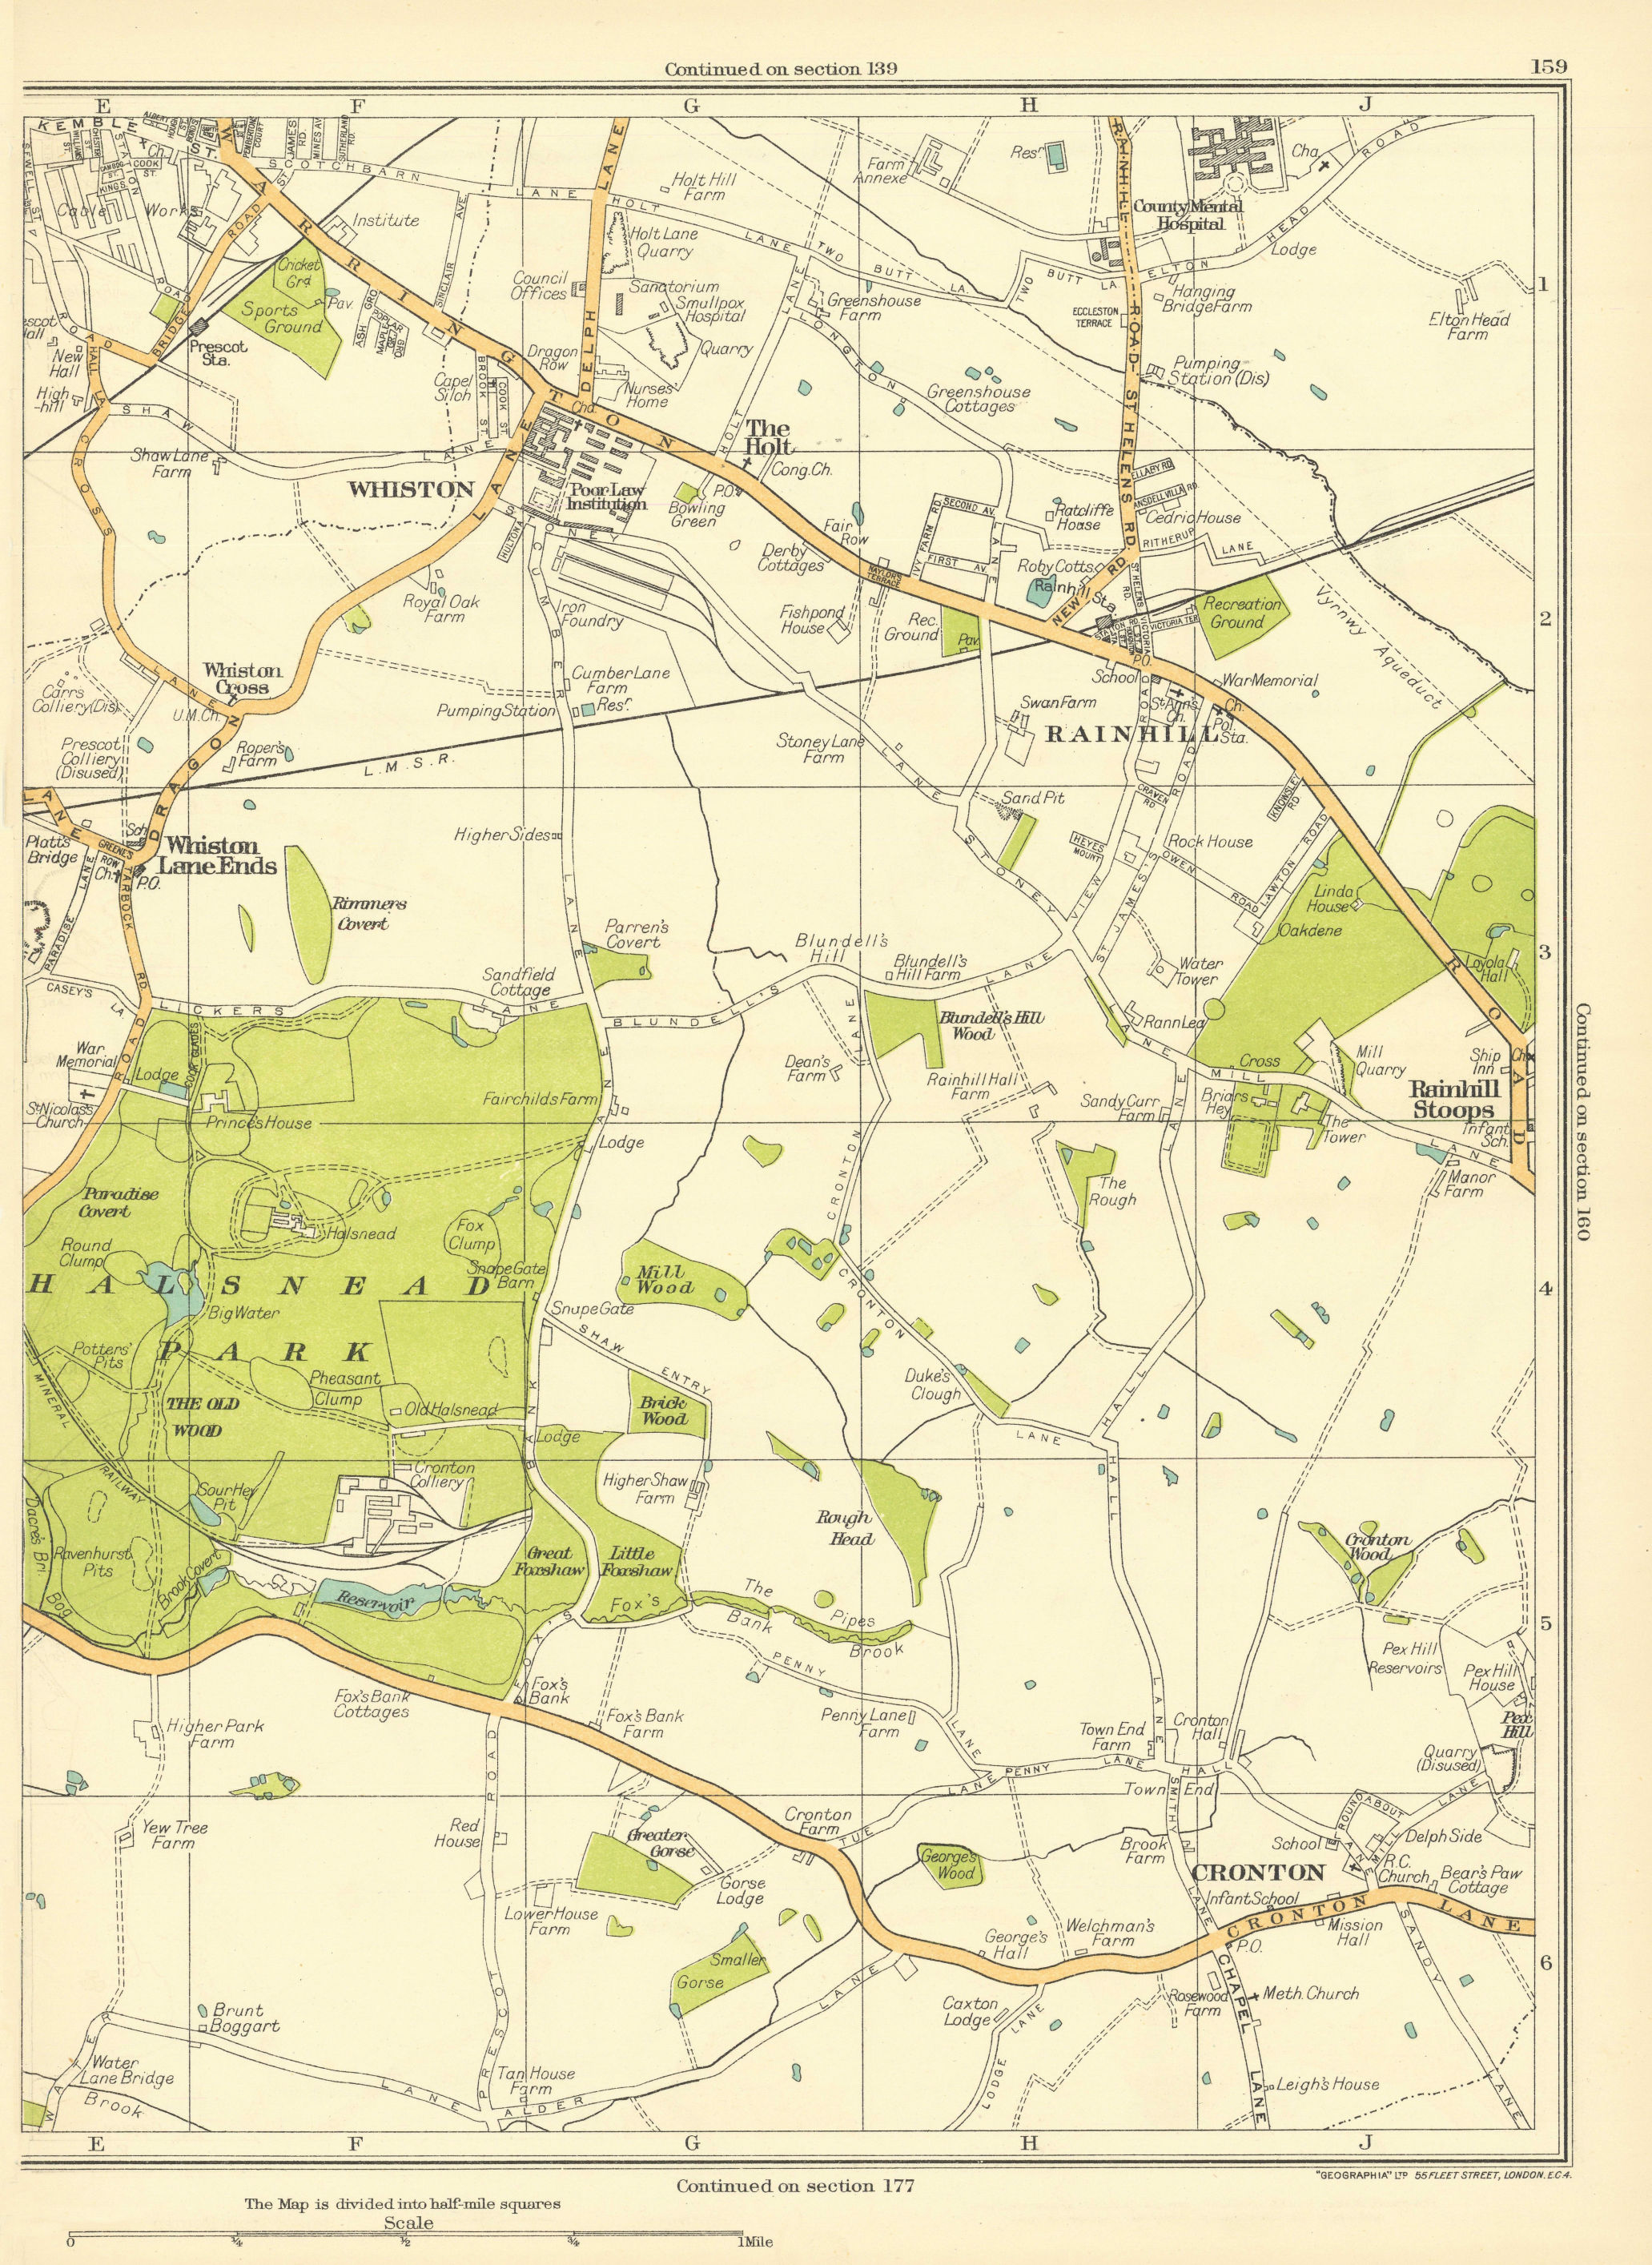 LANCS Prescot Whiston Holt Lane Ends Halsnead Park Cronton Rainhill 1935 map